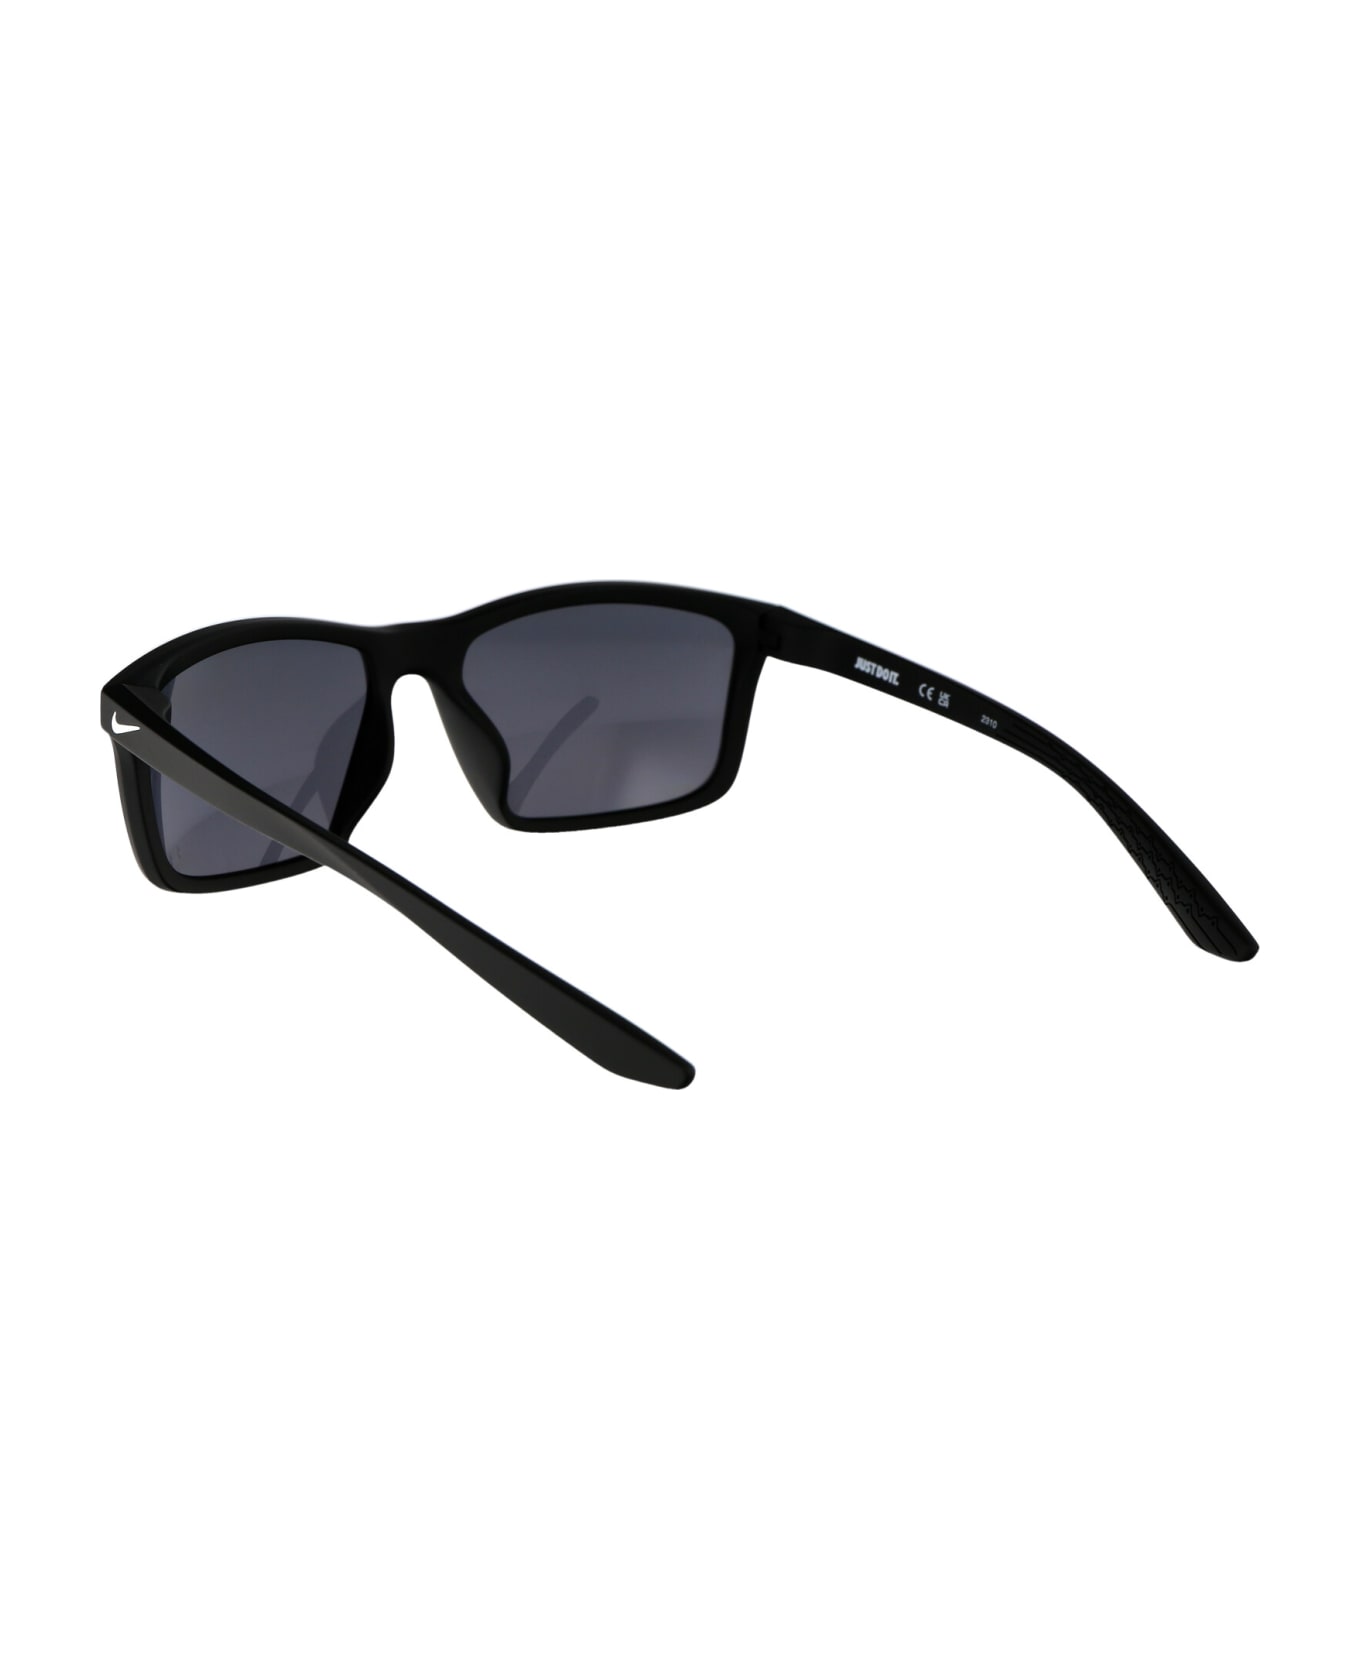 Nike Valiant Sunglasses - 010 DARK GREY MATTE BLACK サングラス